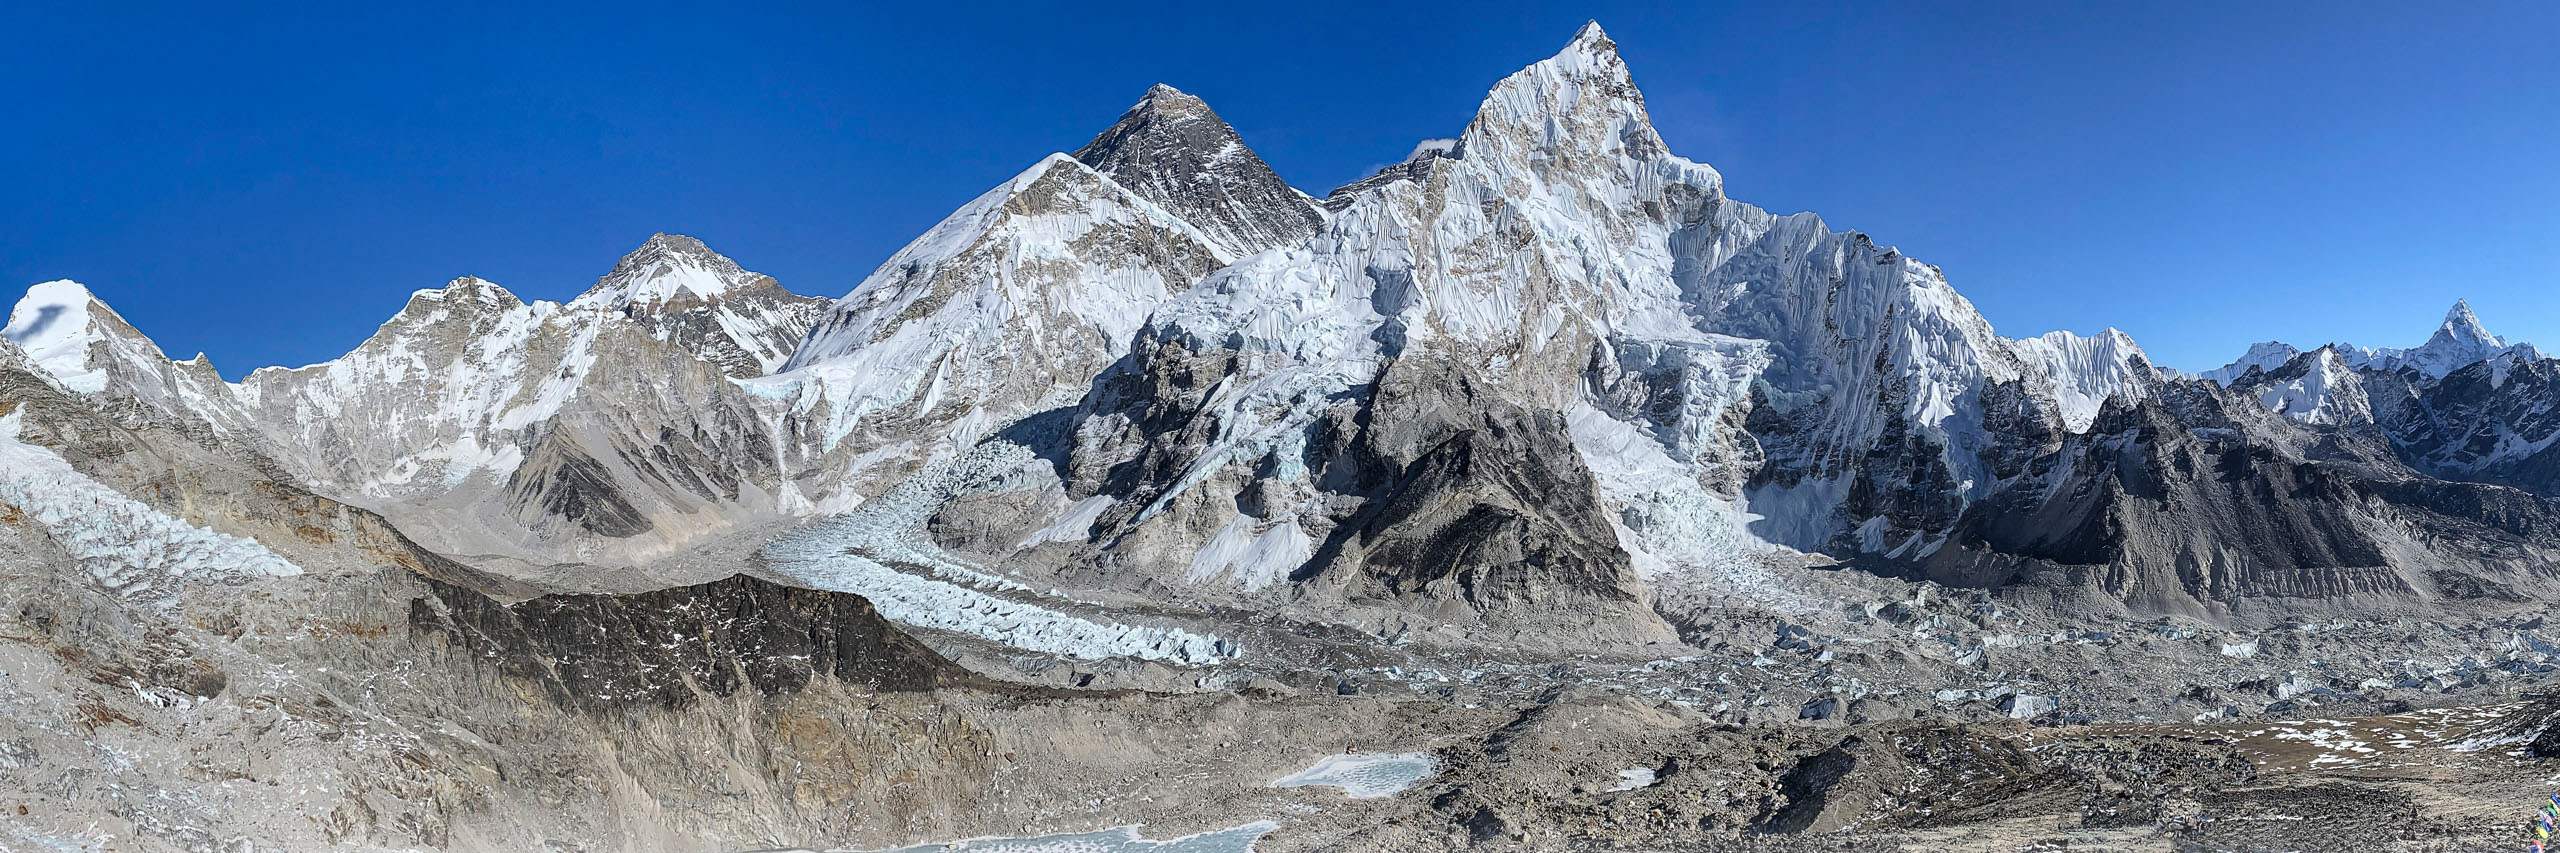 Fine Art Prints of Everest and the Khumbu Glacier